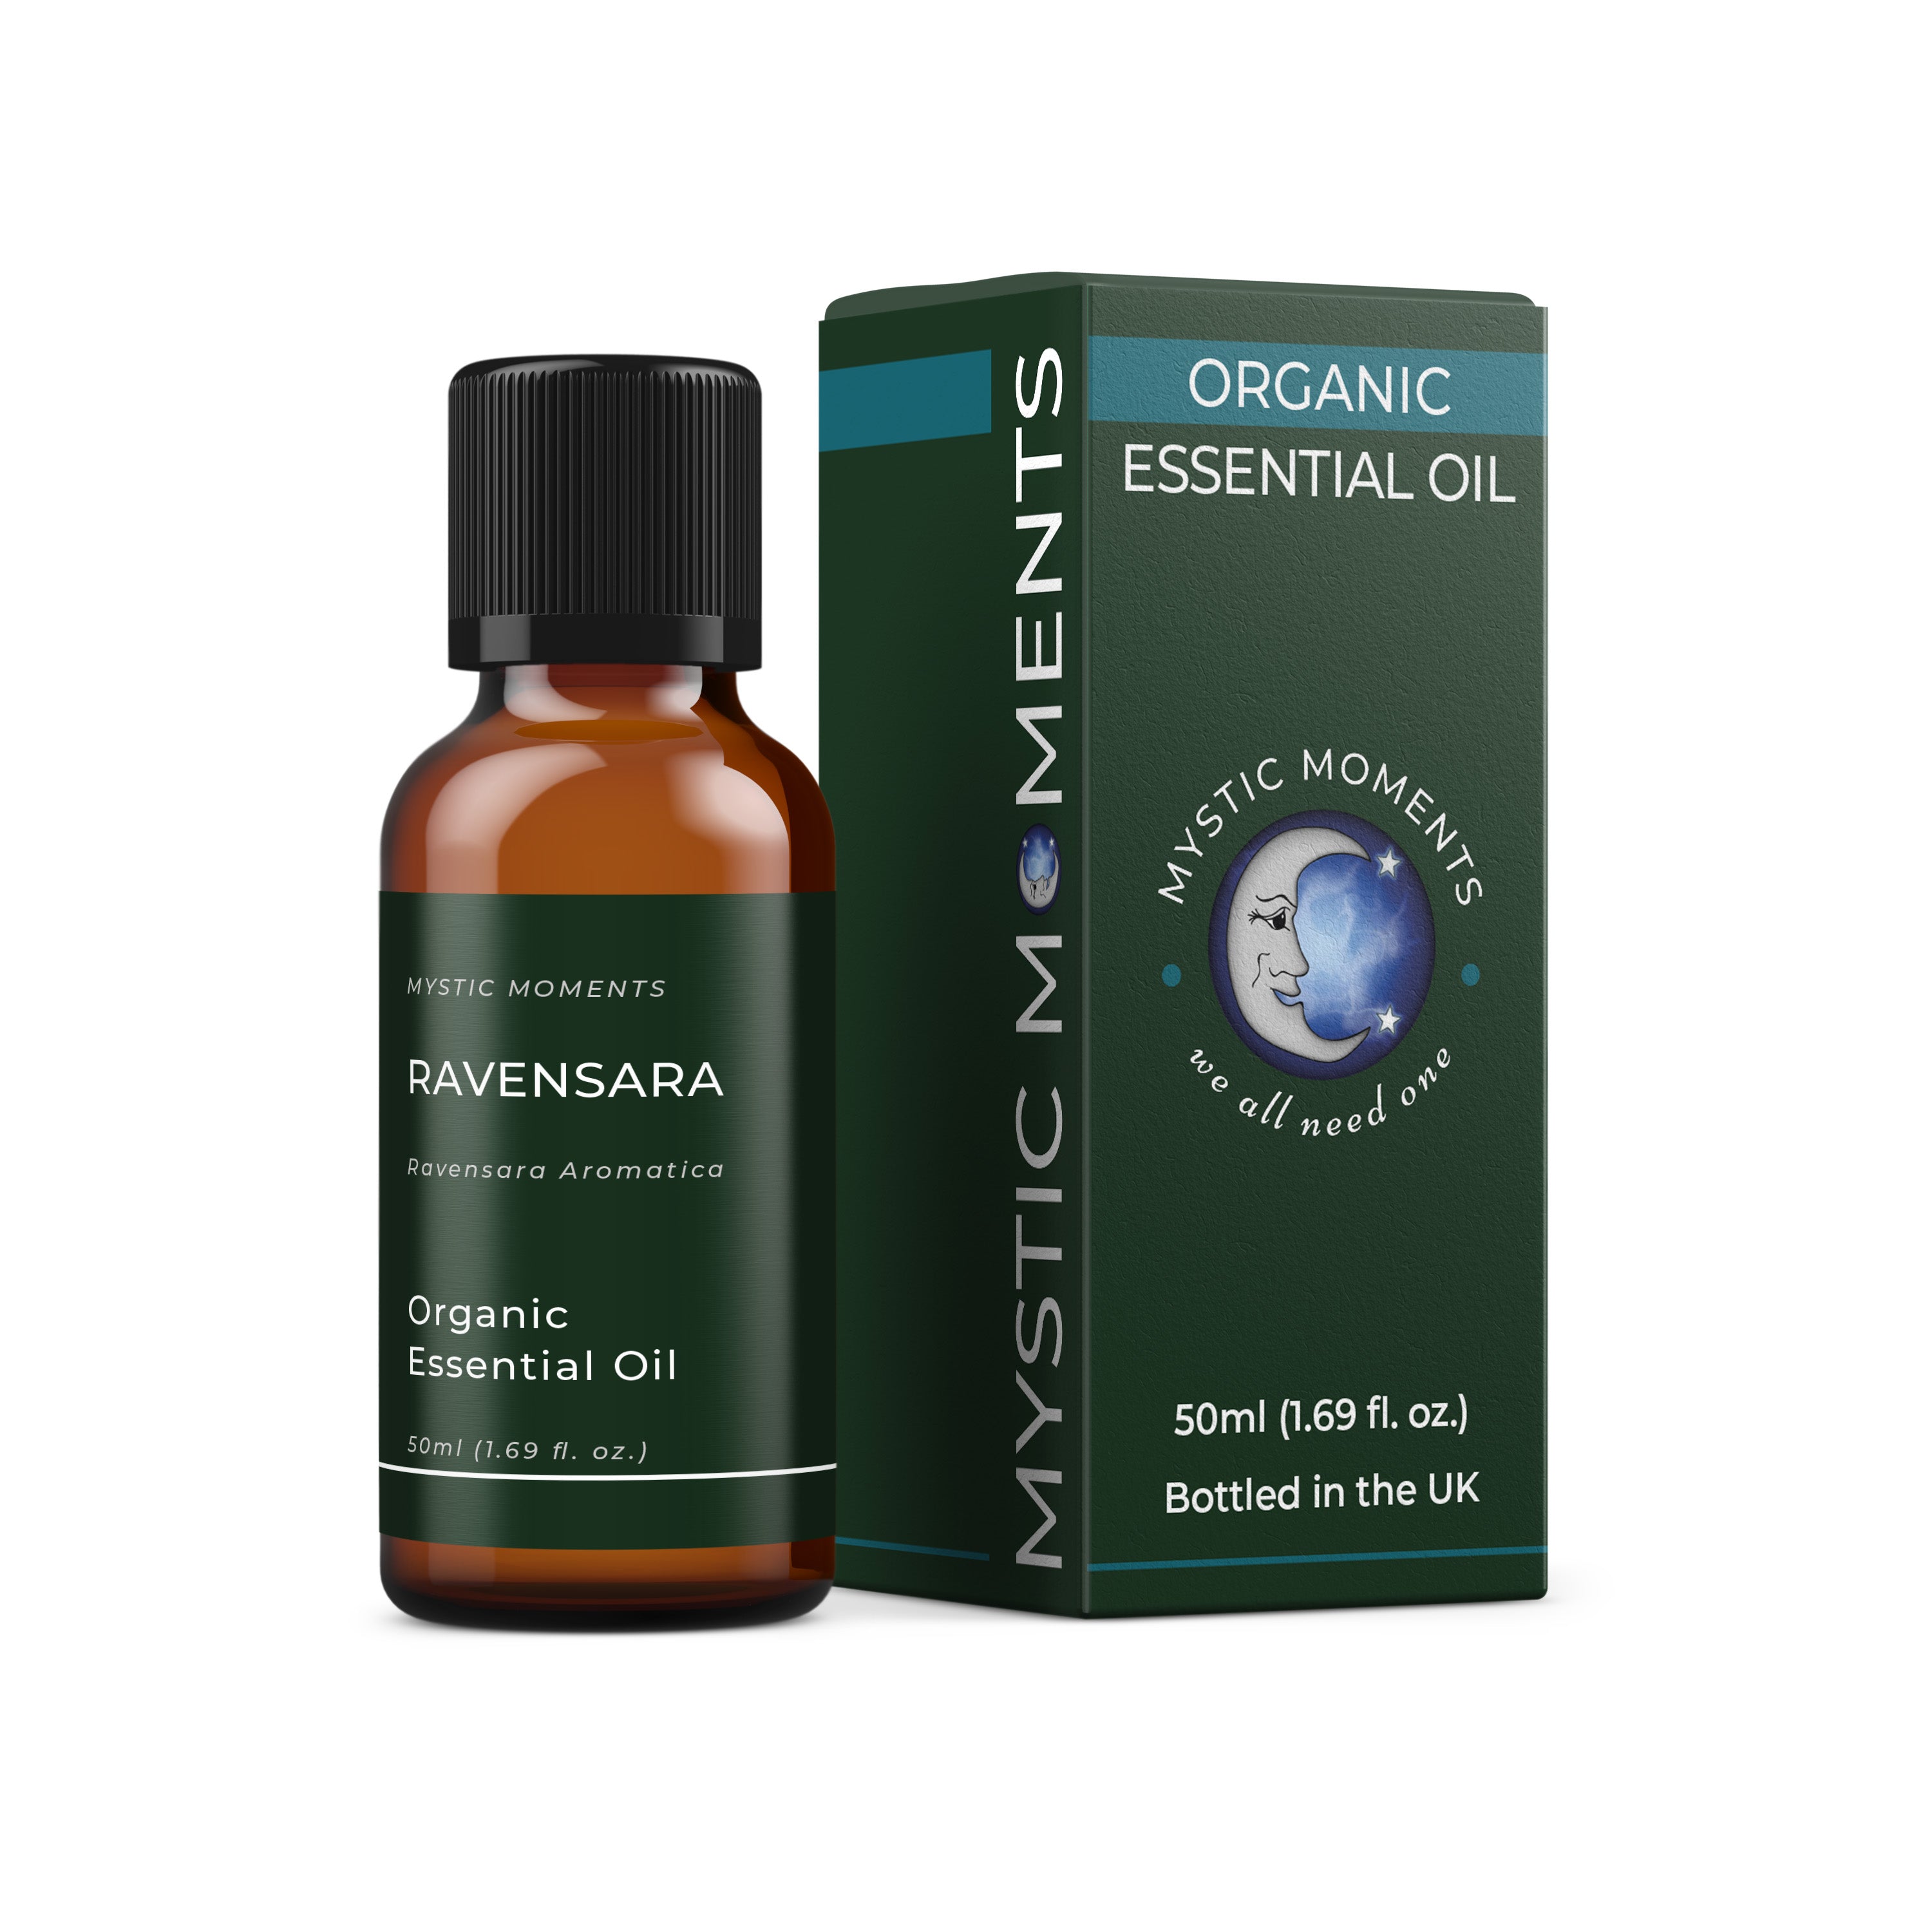 Ravensara Essential Oil (Organic)